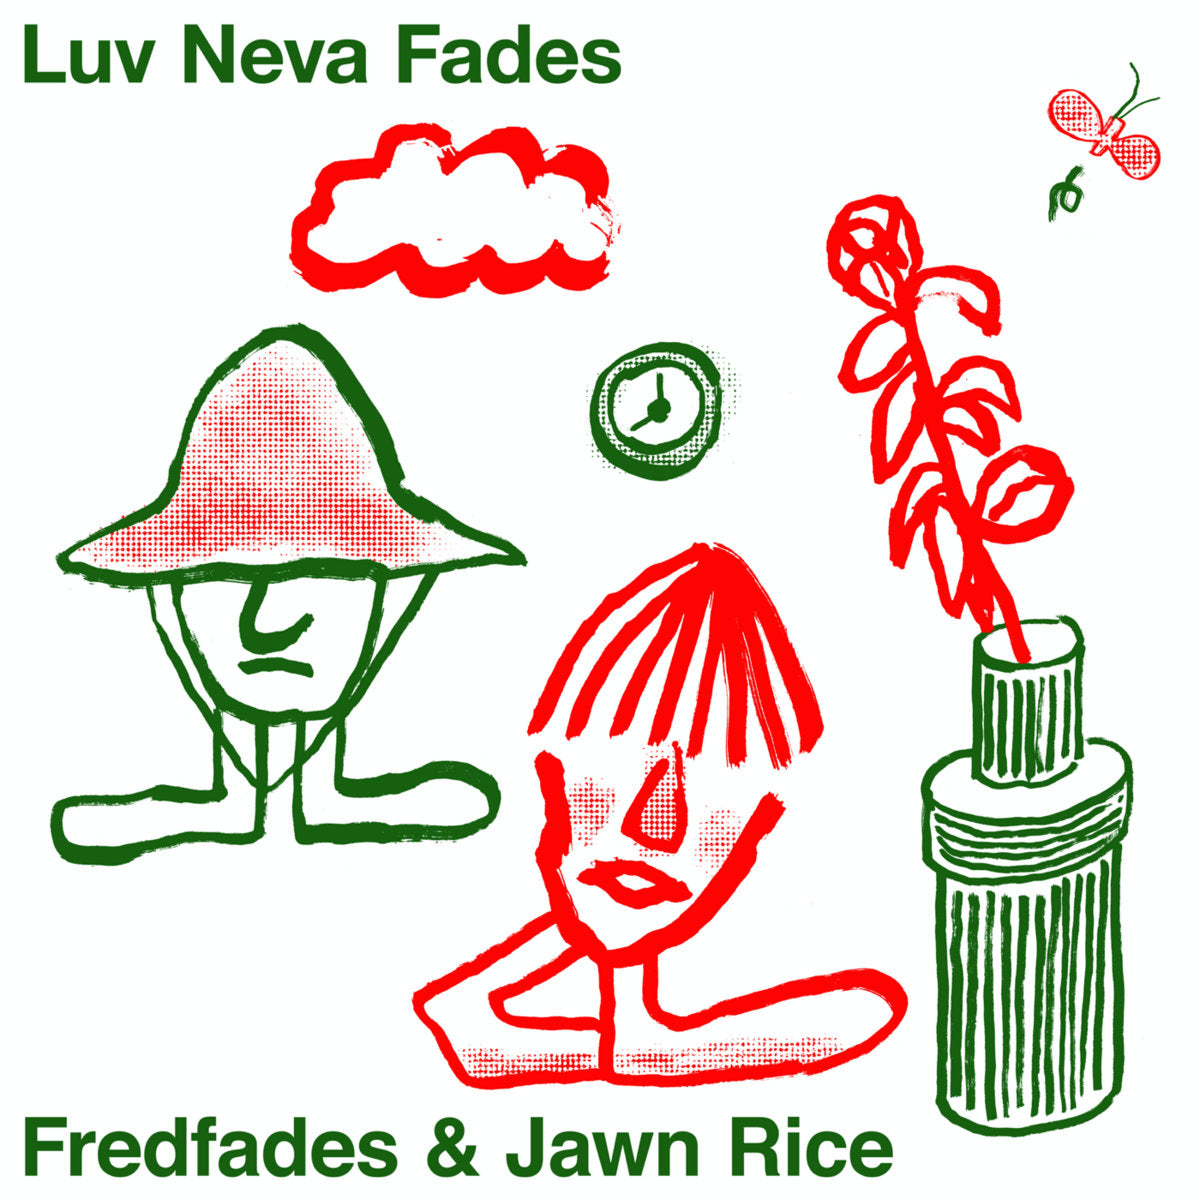 Fredfades & Jawn Rice - Luv Neva Fades